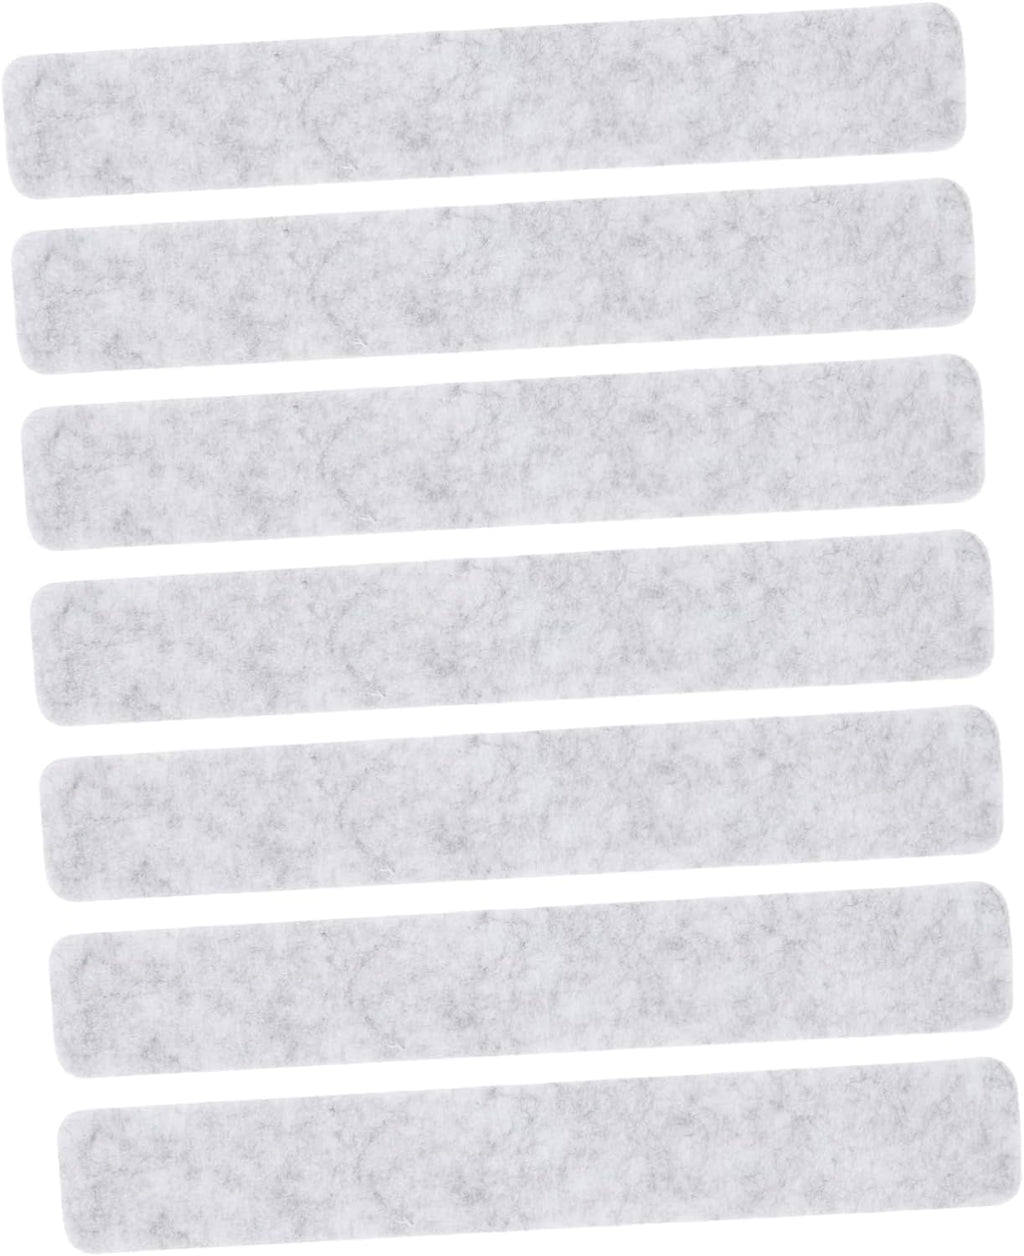 8 Pcs Felt Message Board Adhesive Felt Board Strips Cork Strips Bulletin Bar Strip with Thumb Tacks